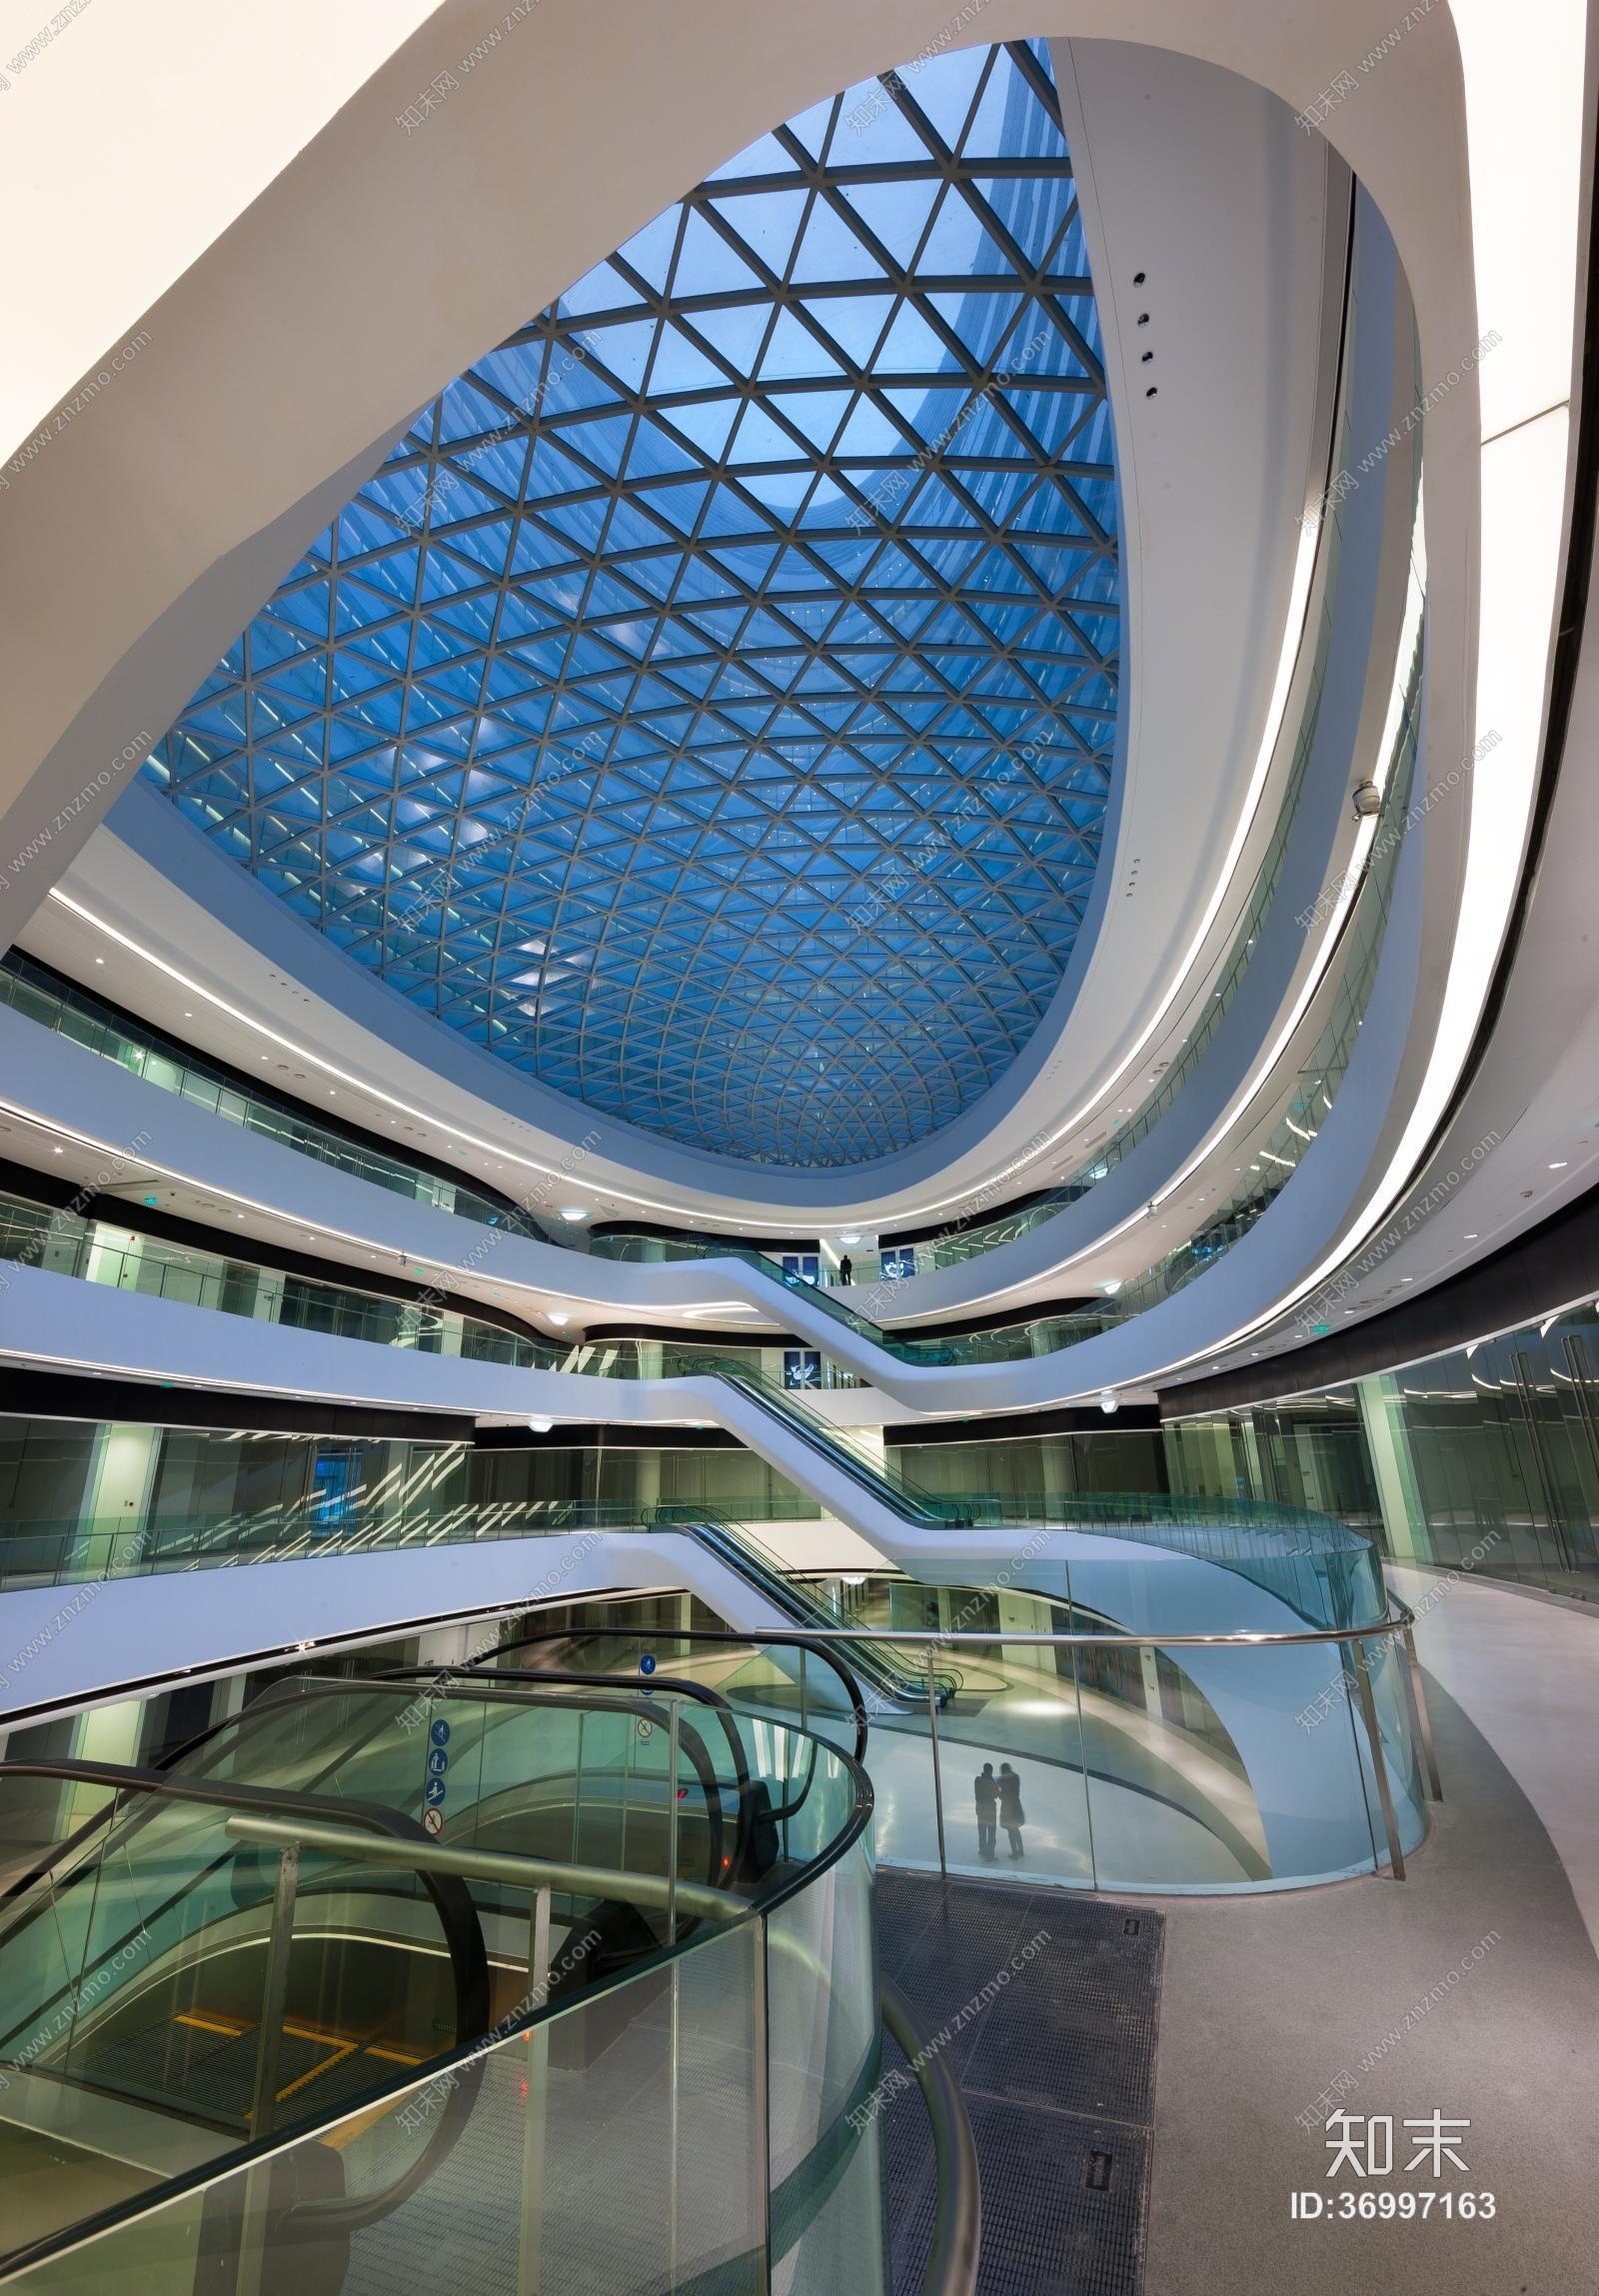 9 amazing buildings designed by Zaha Hadid - 24Housing